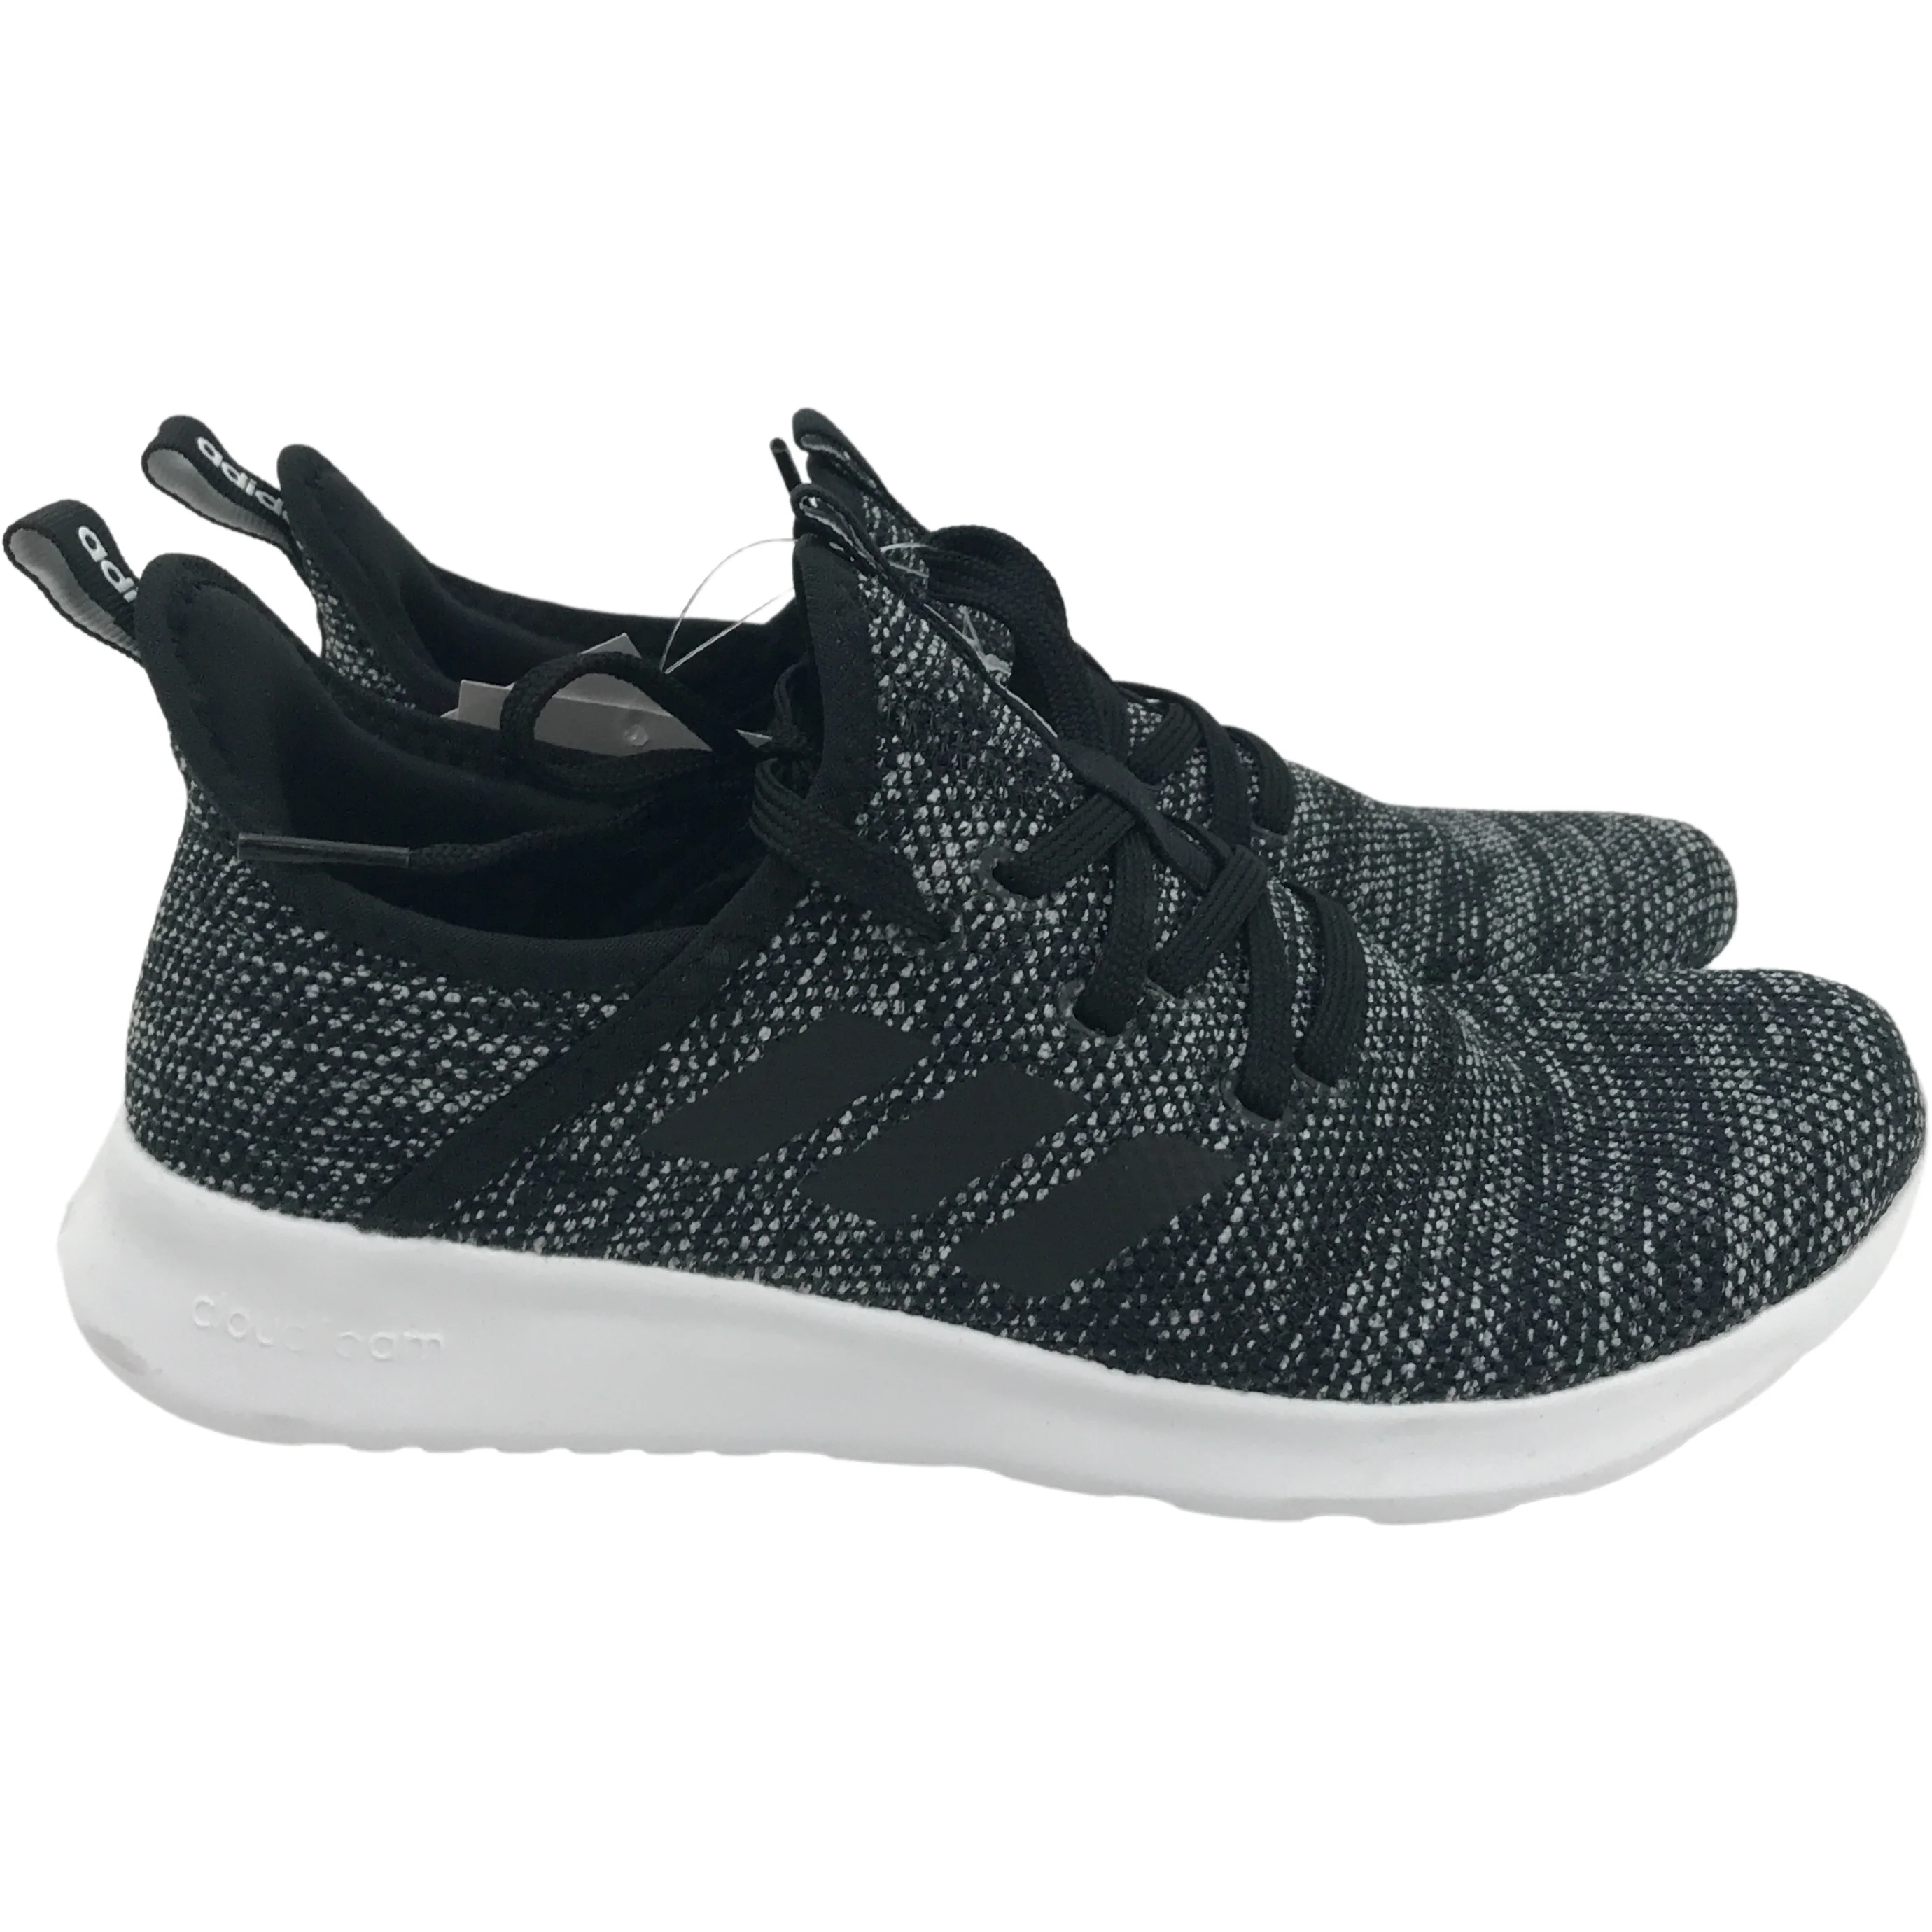 Adidas Women's Running Shoes / Cloudfoam Pure / Black & Grey / Size 7